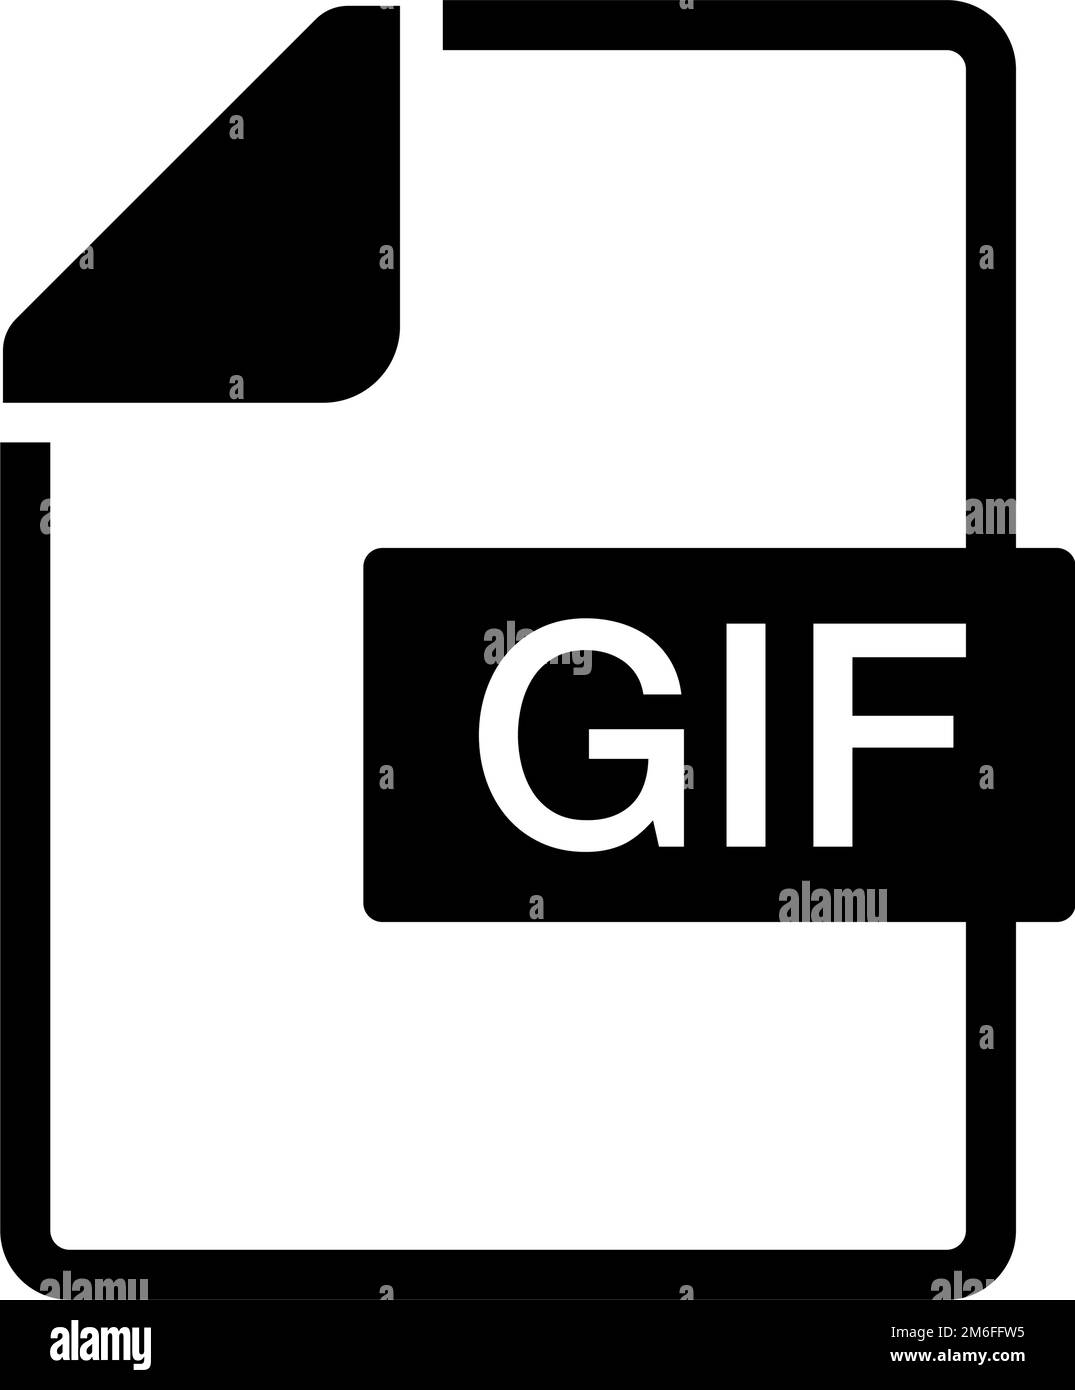 Gif image file extension icon fotografías e imágenes de alta resolución -  Alamy